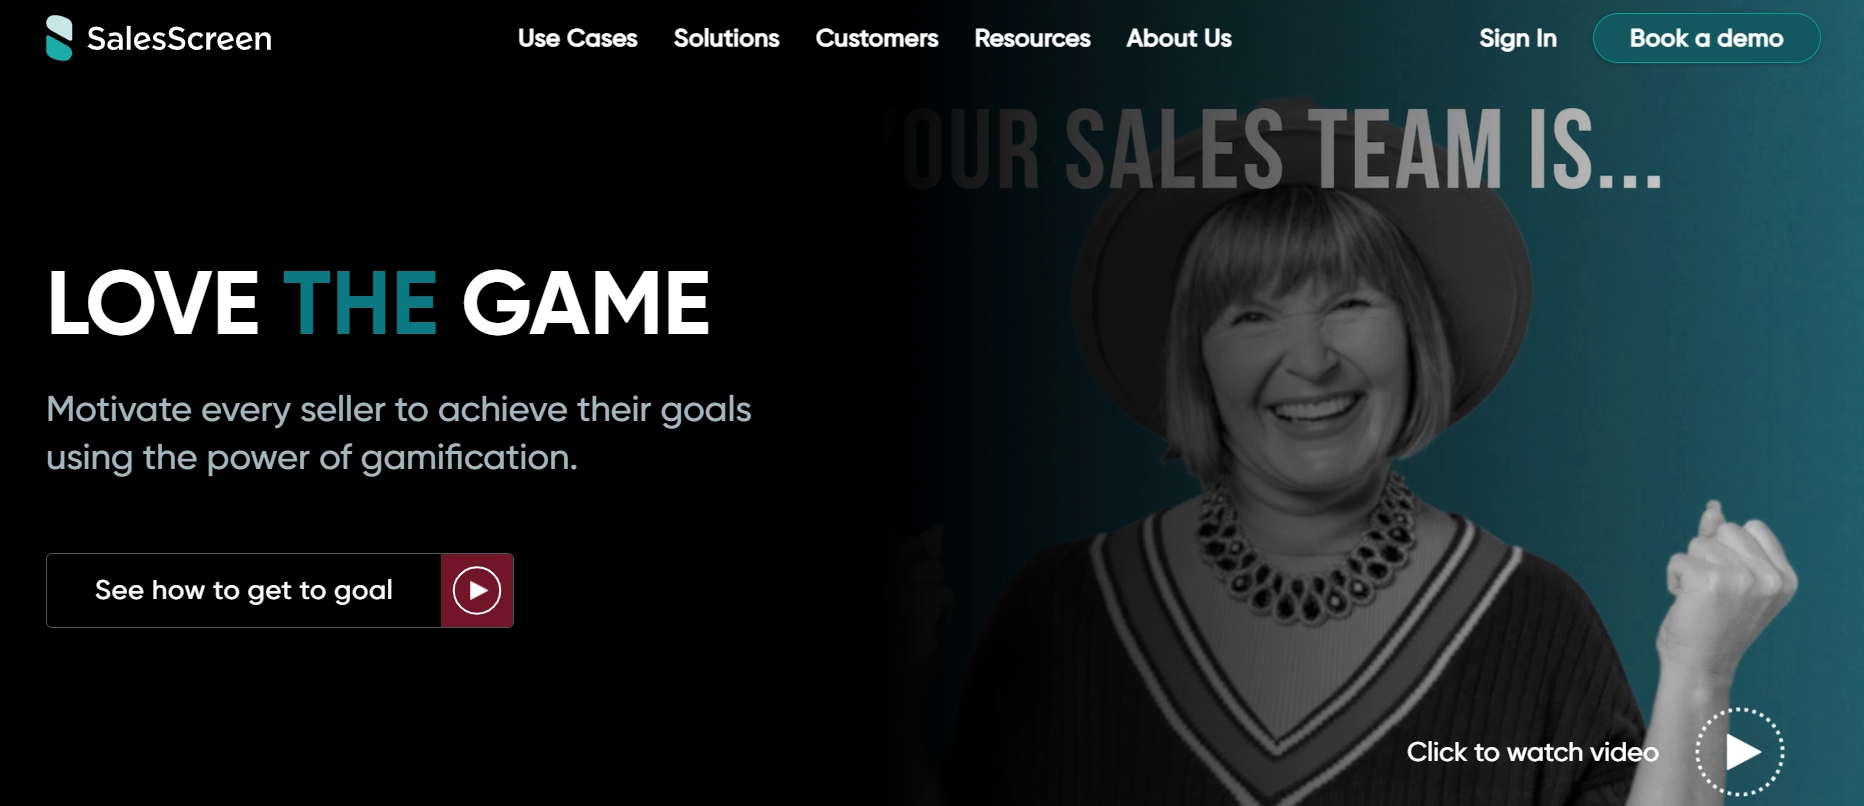 salescreen sales coaching software